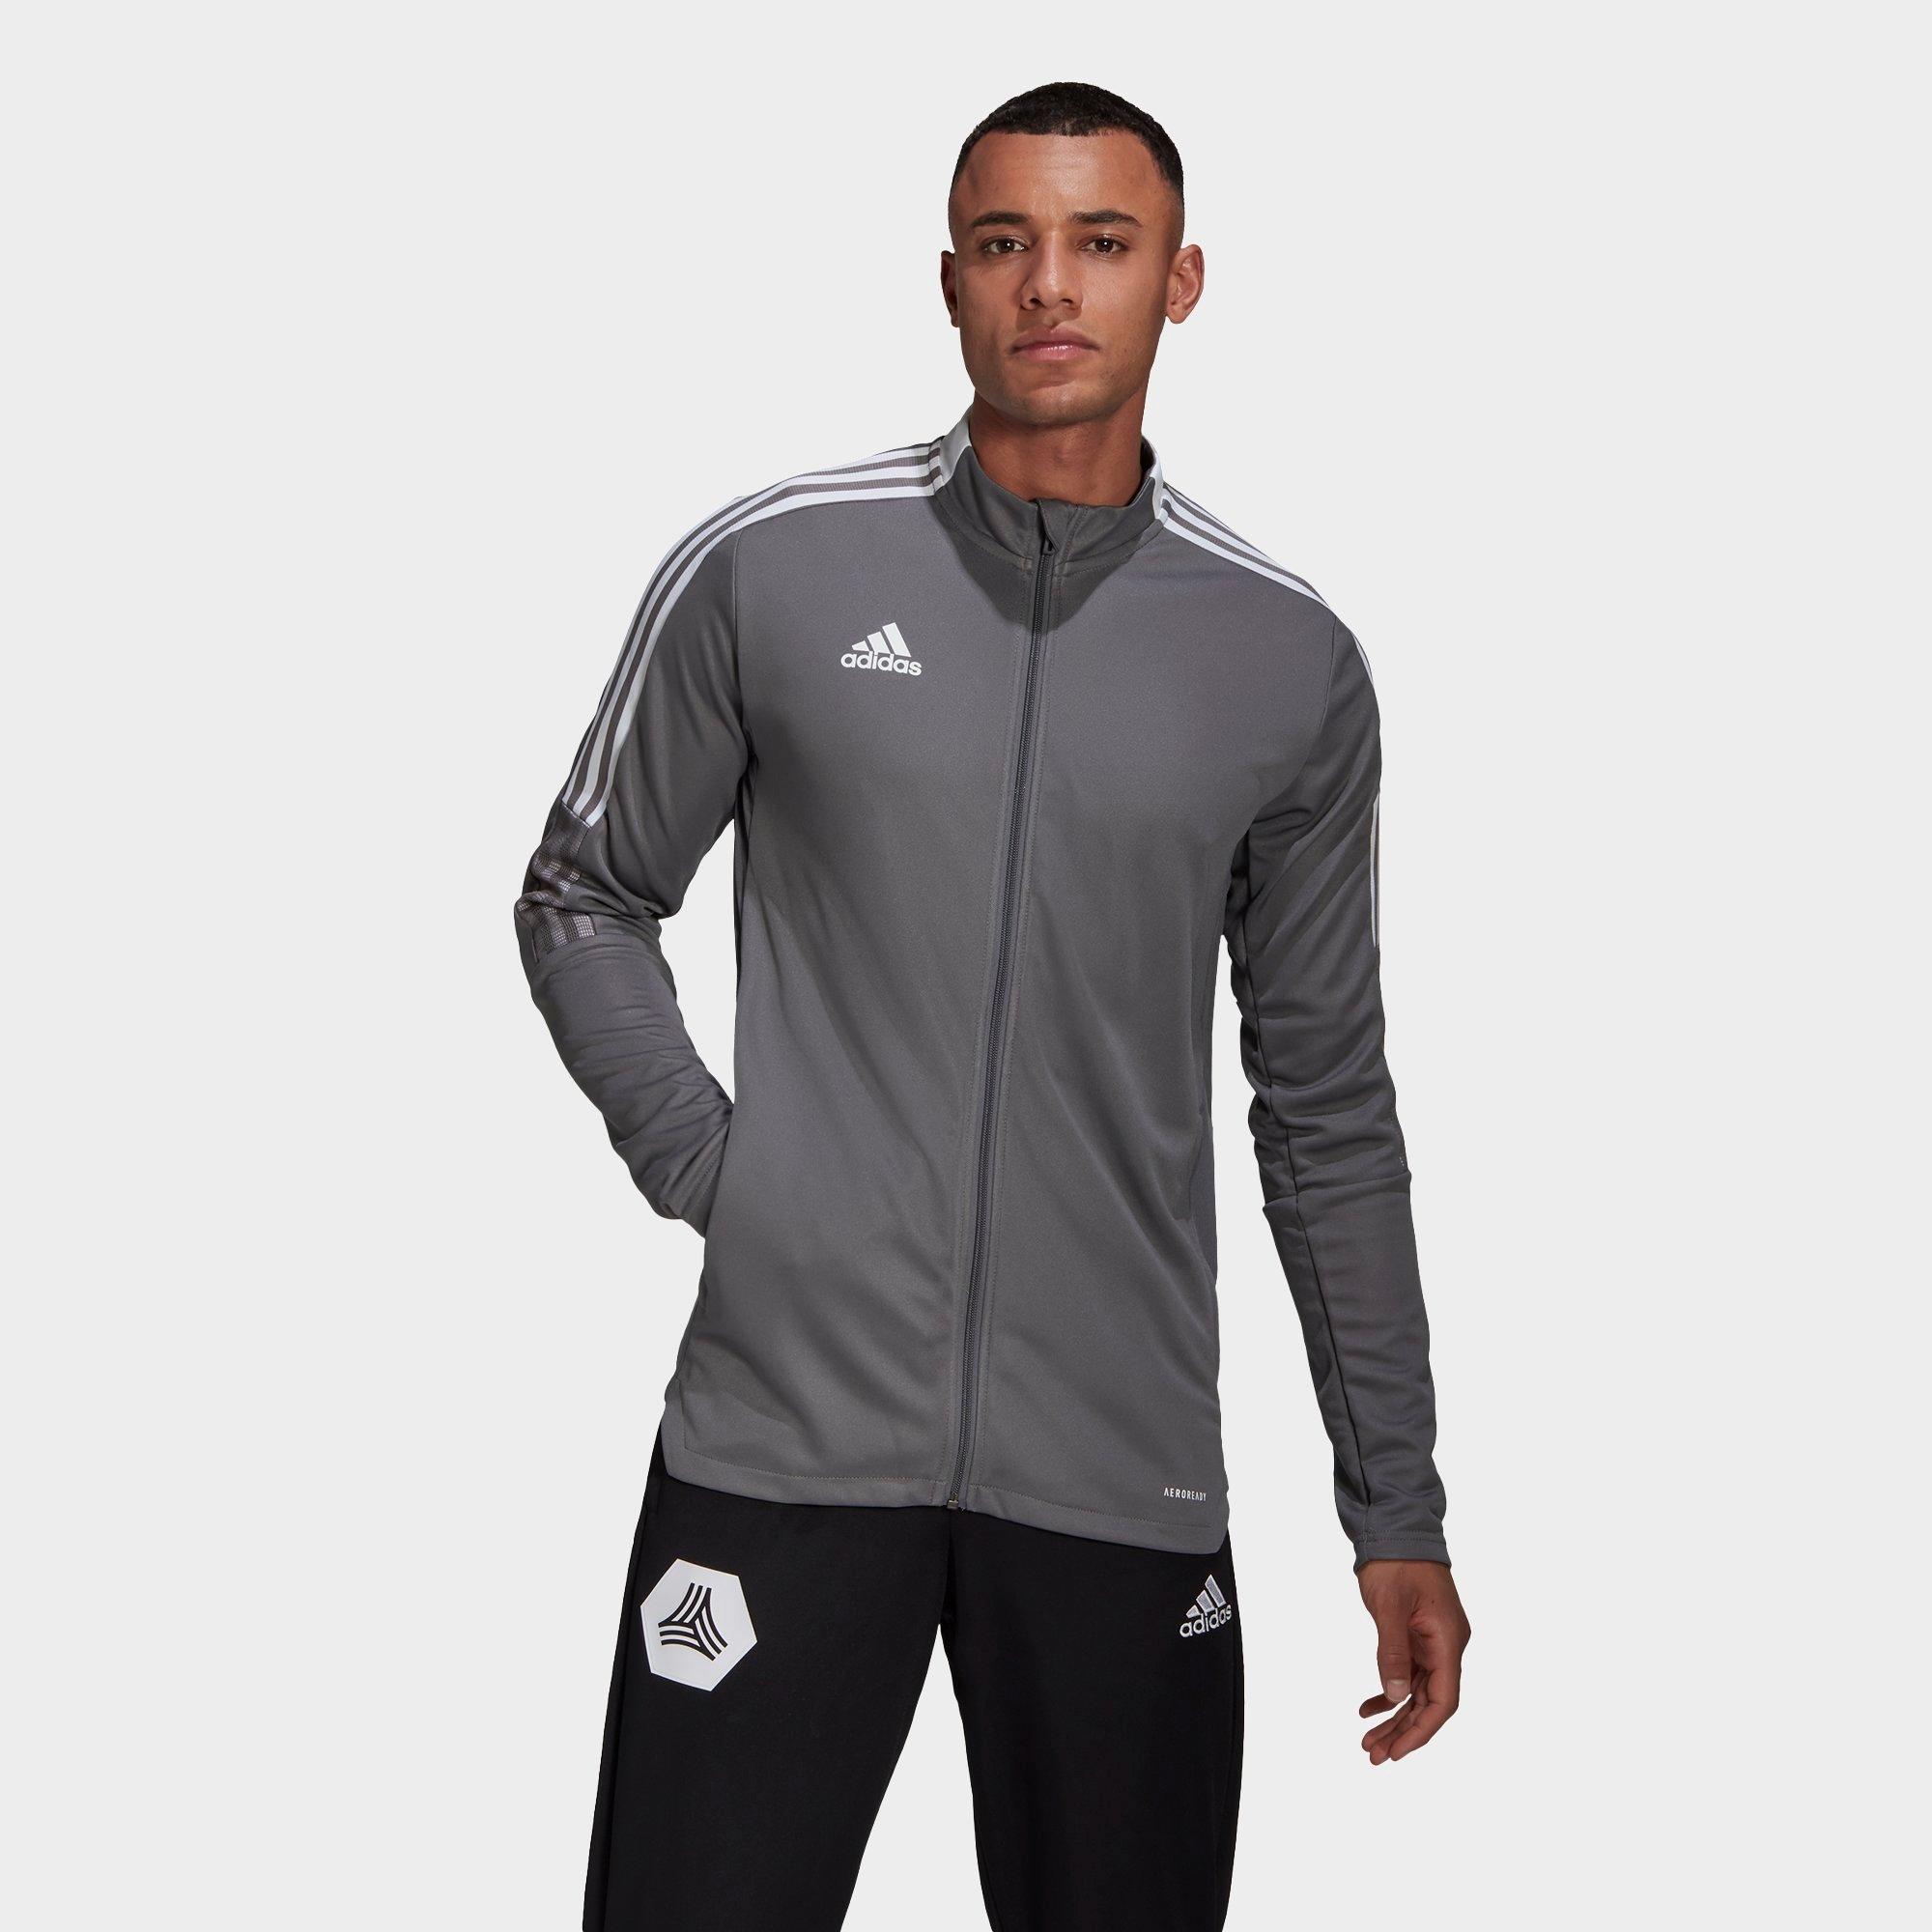 adidas team select jacket